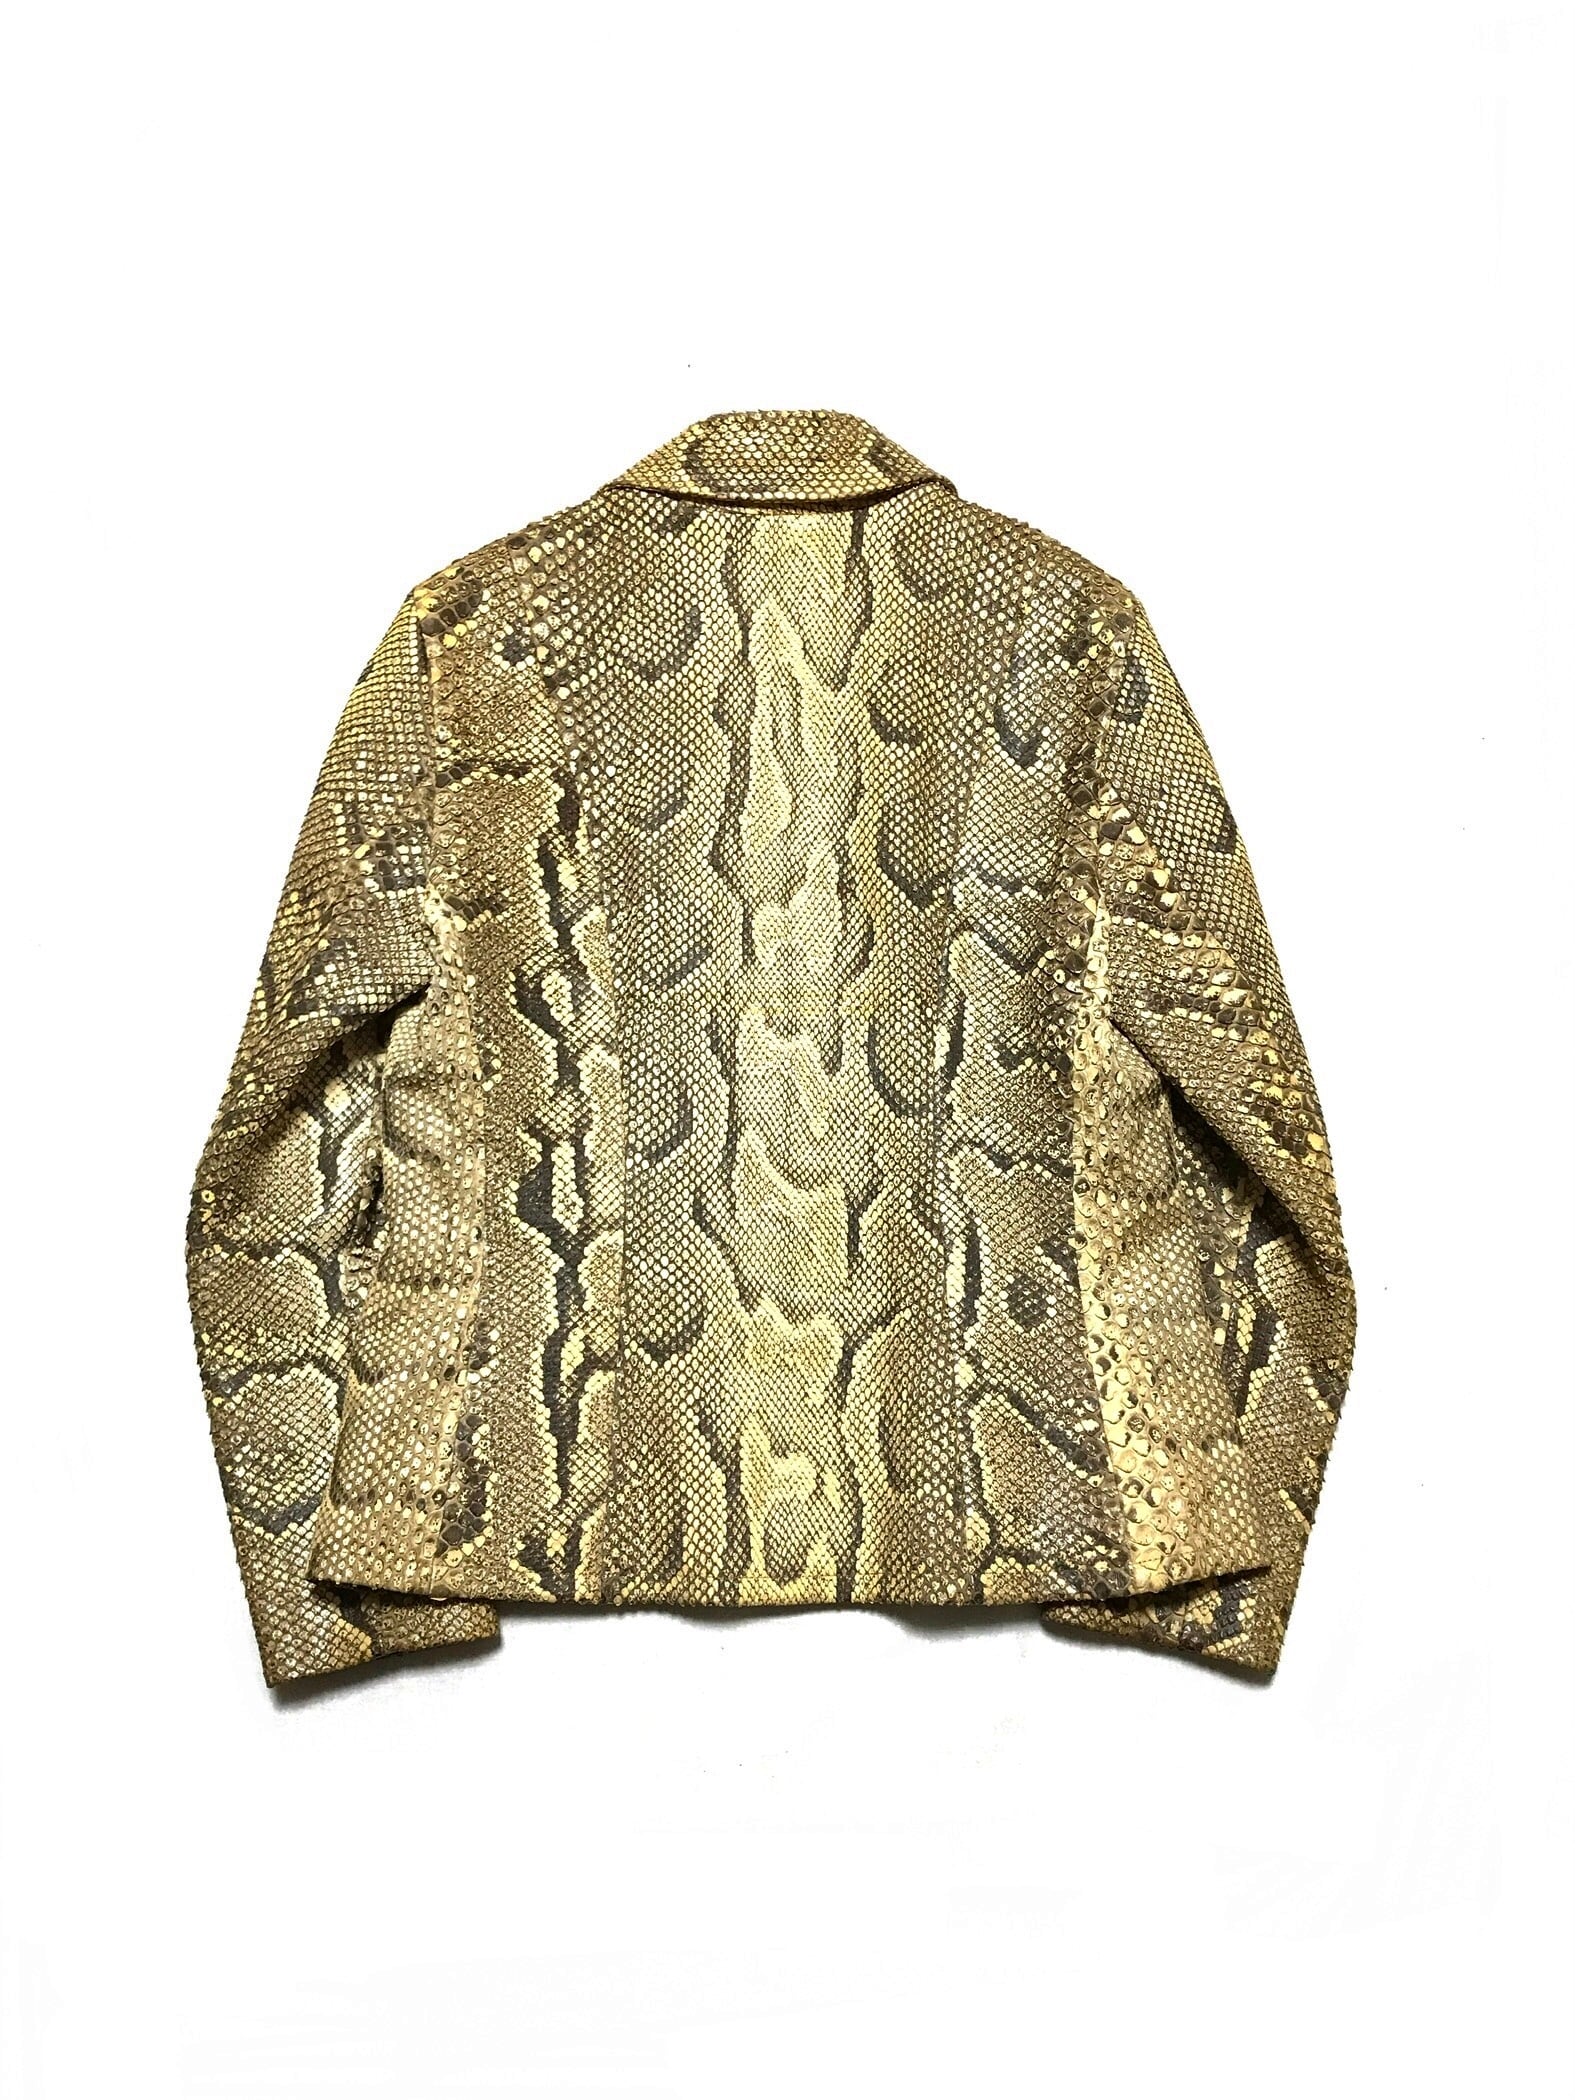 CARLA FALLERI Golden-Python Leather Zip Up JKT | ETRAK